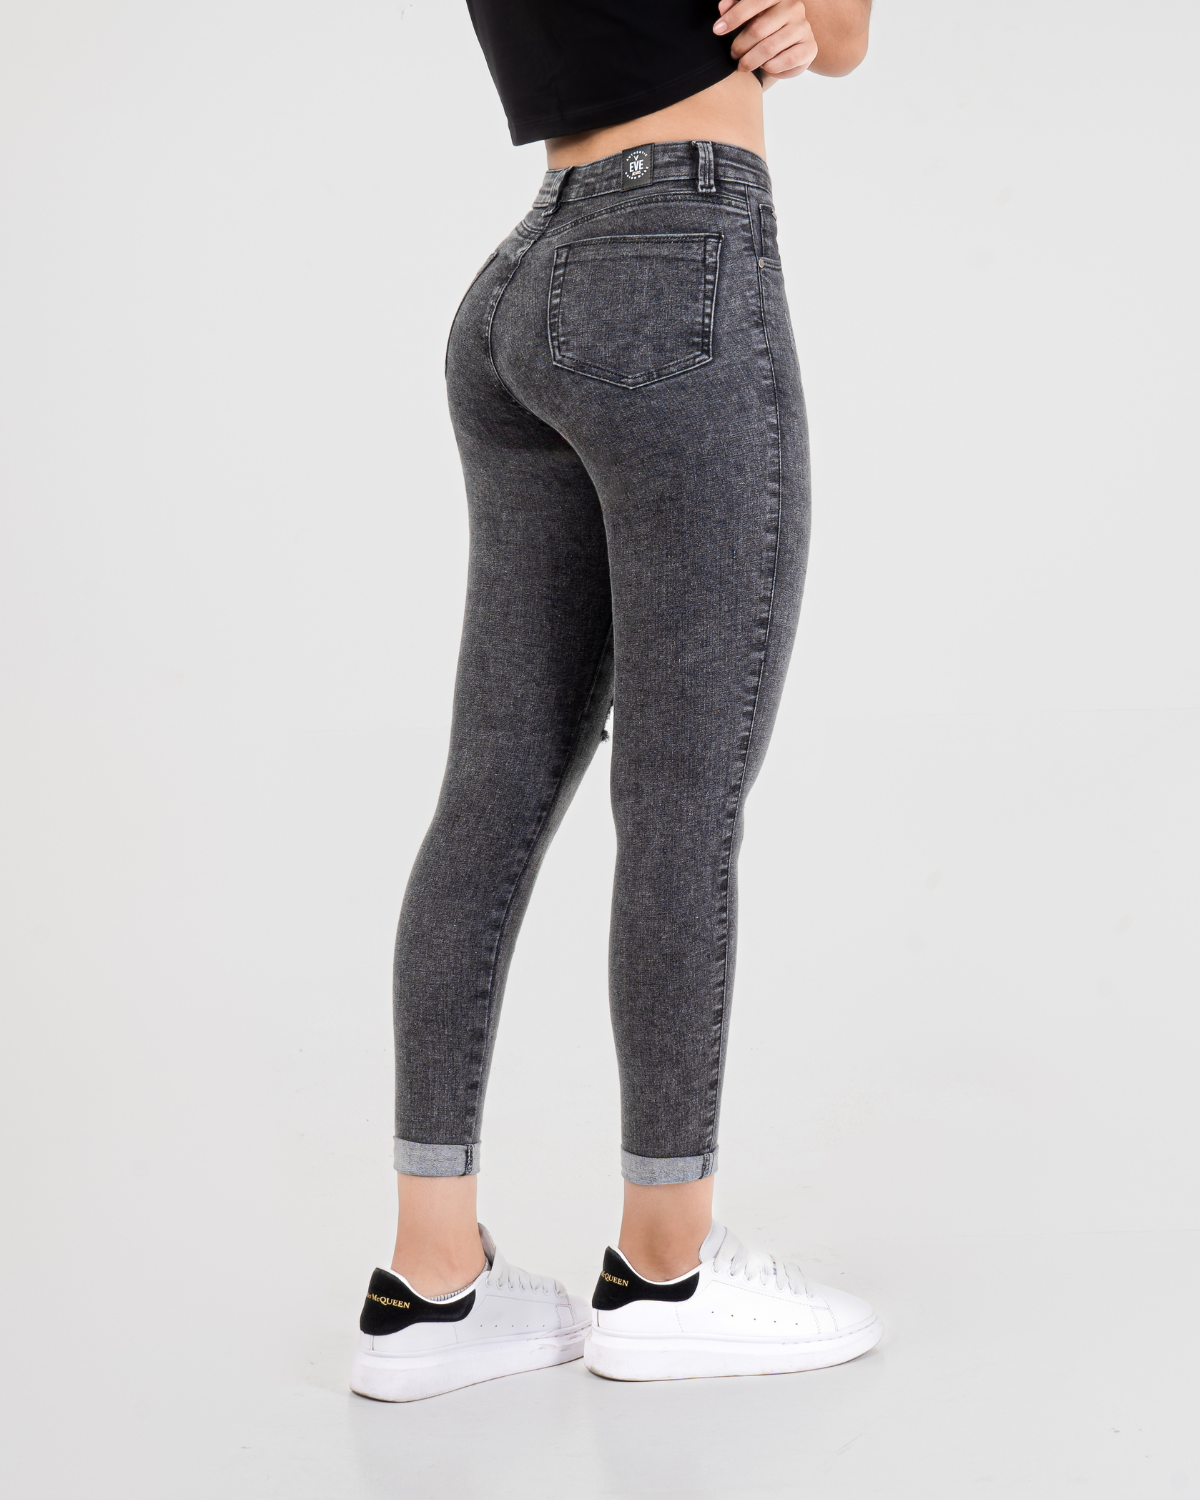 Jeans Con Realce Dama EVE Ref 12810 - Luegopago